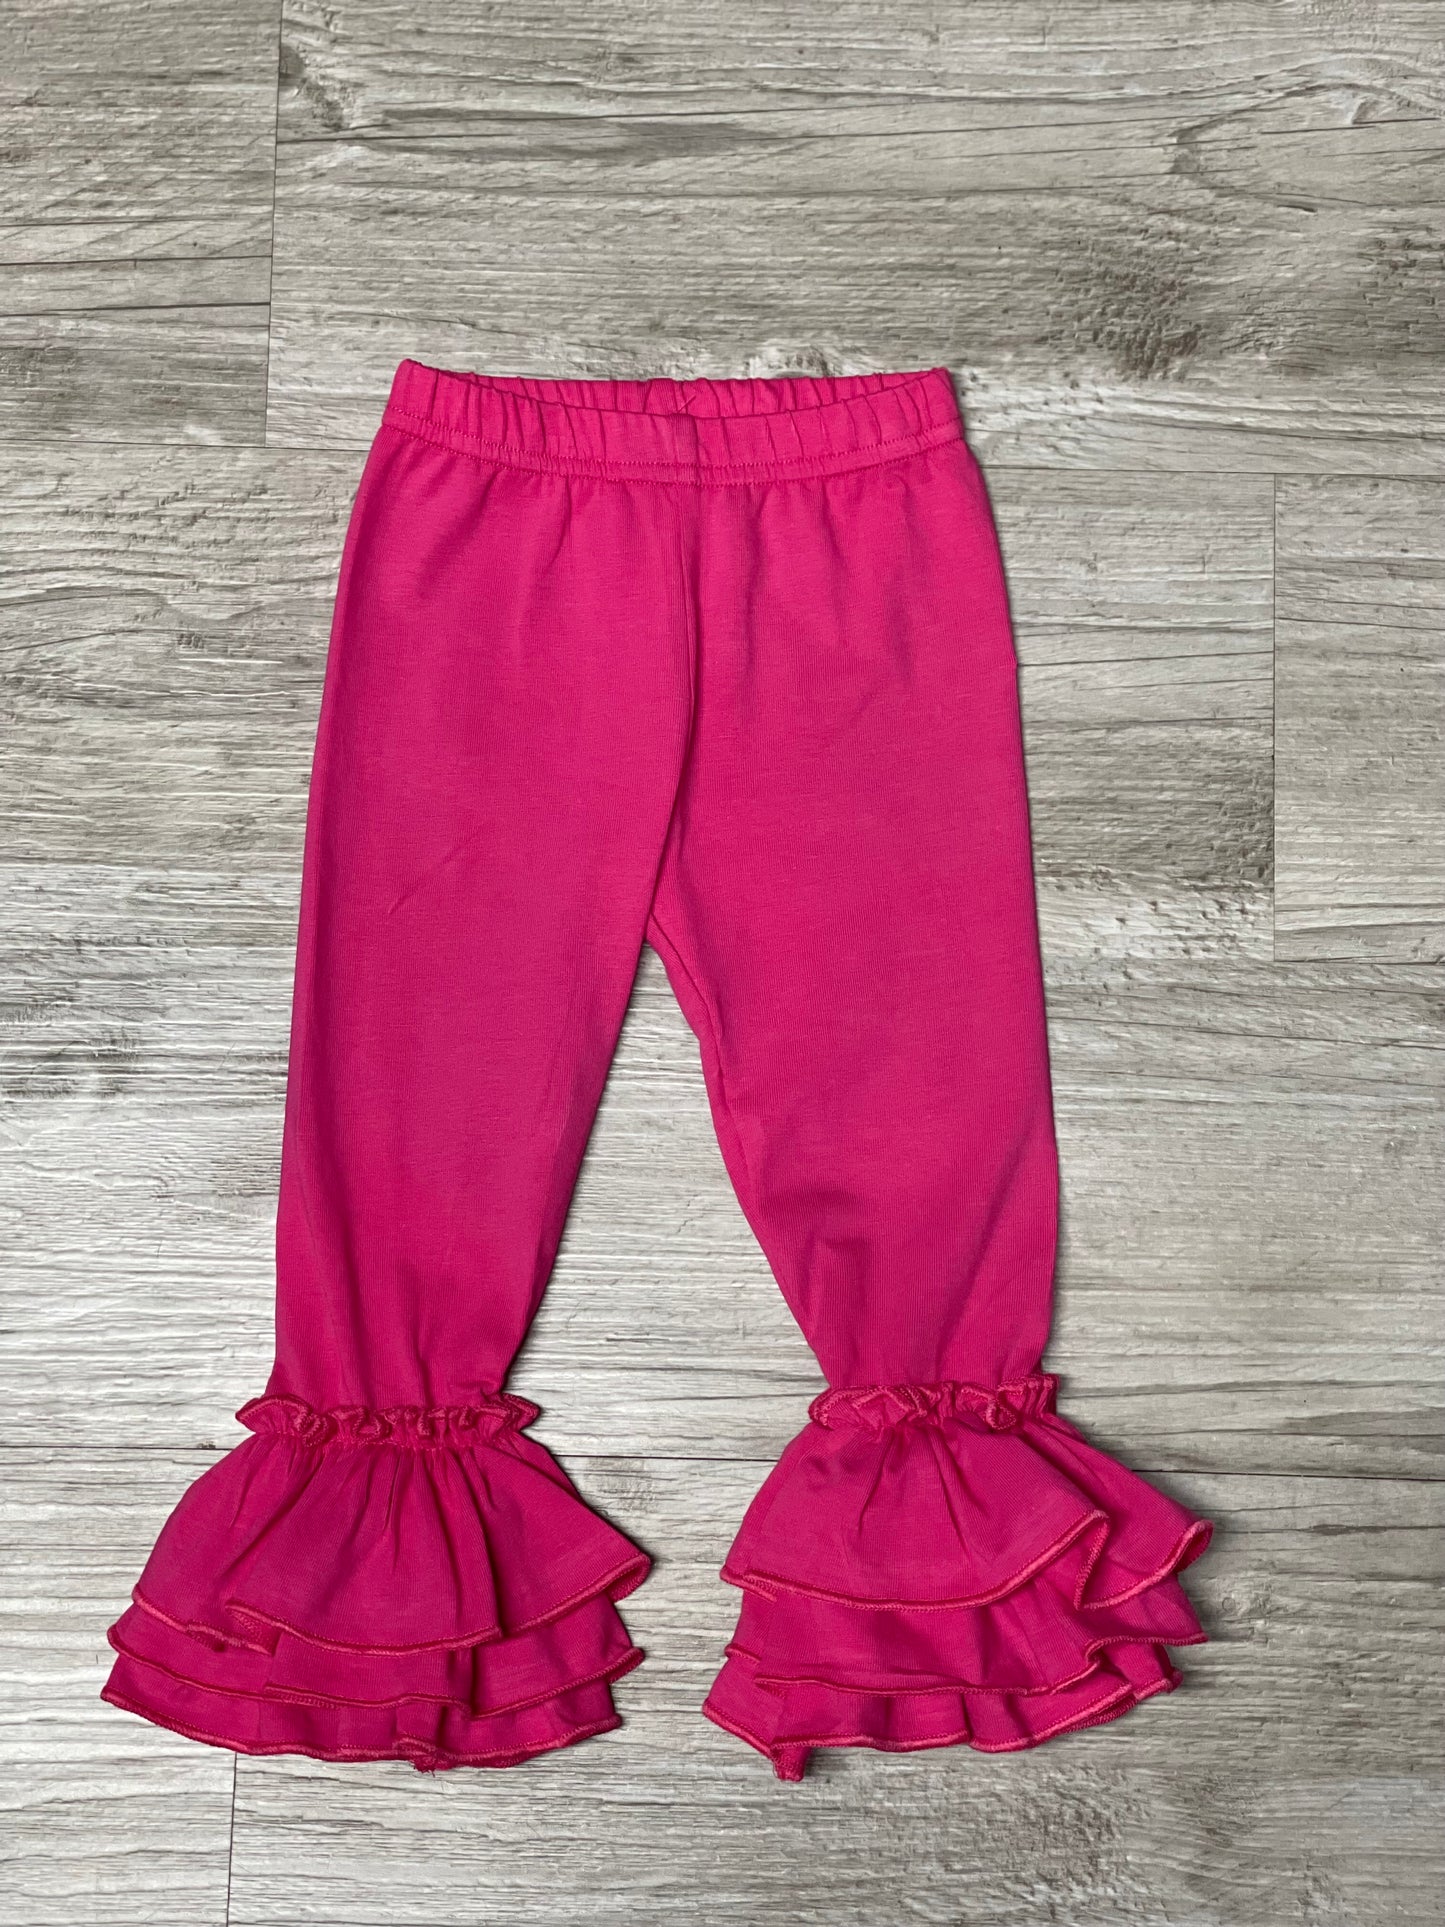 Solid Hot Pink Truffle Pants - Salt Threads